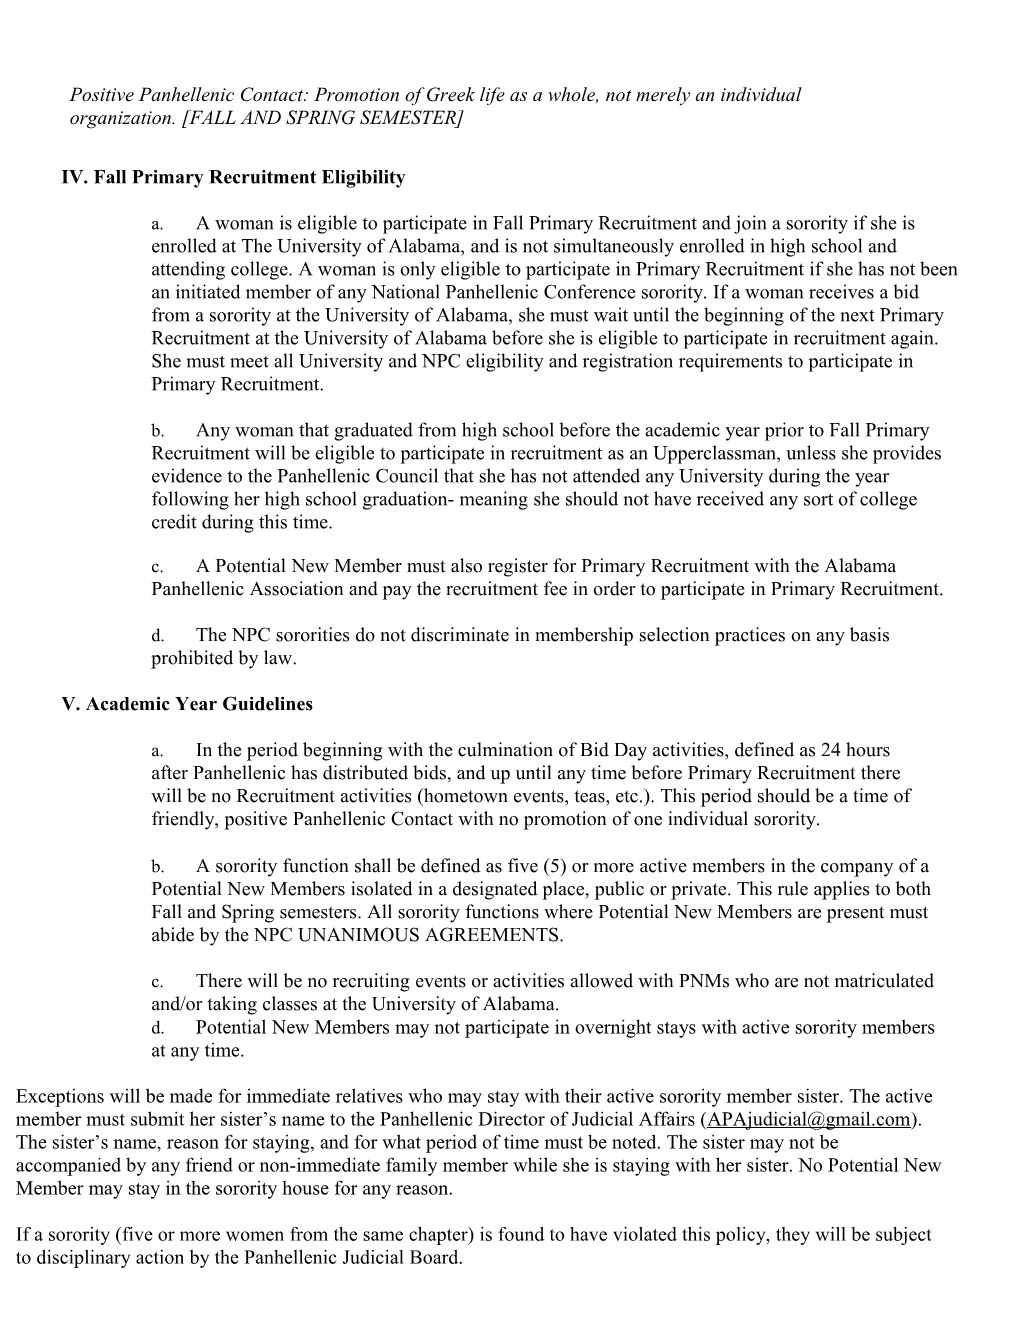 Recruitment Rules of Alabama Panhellenic Association